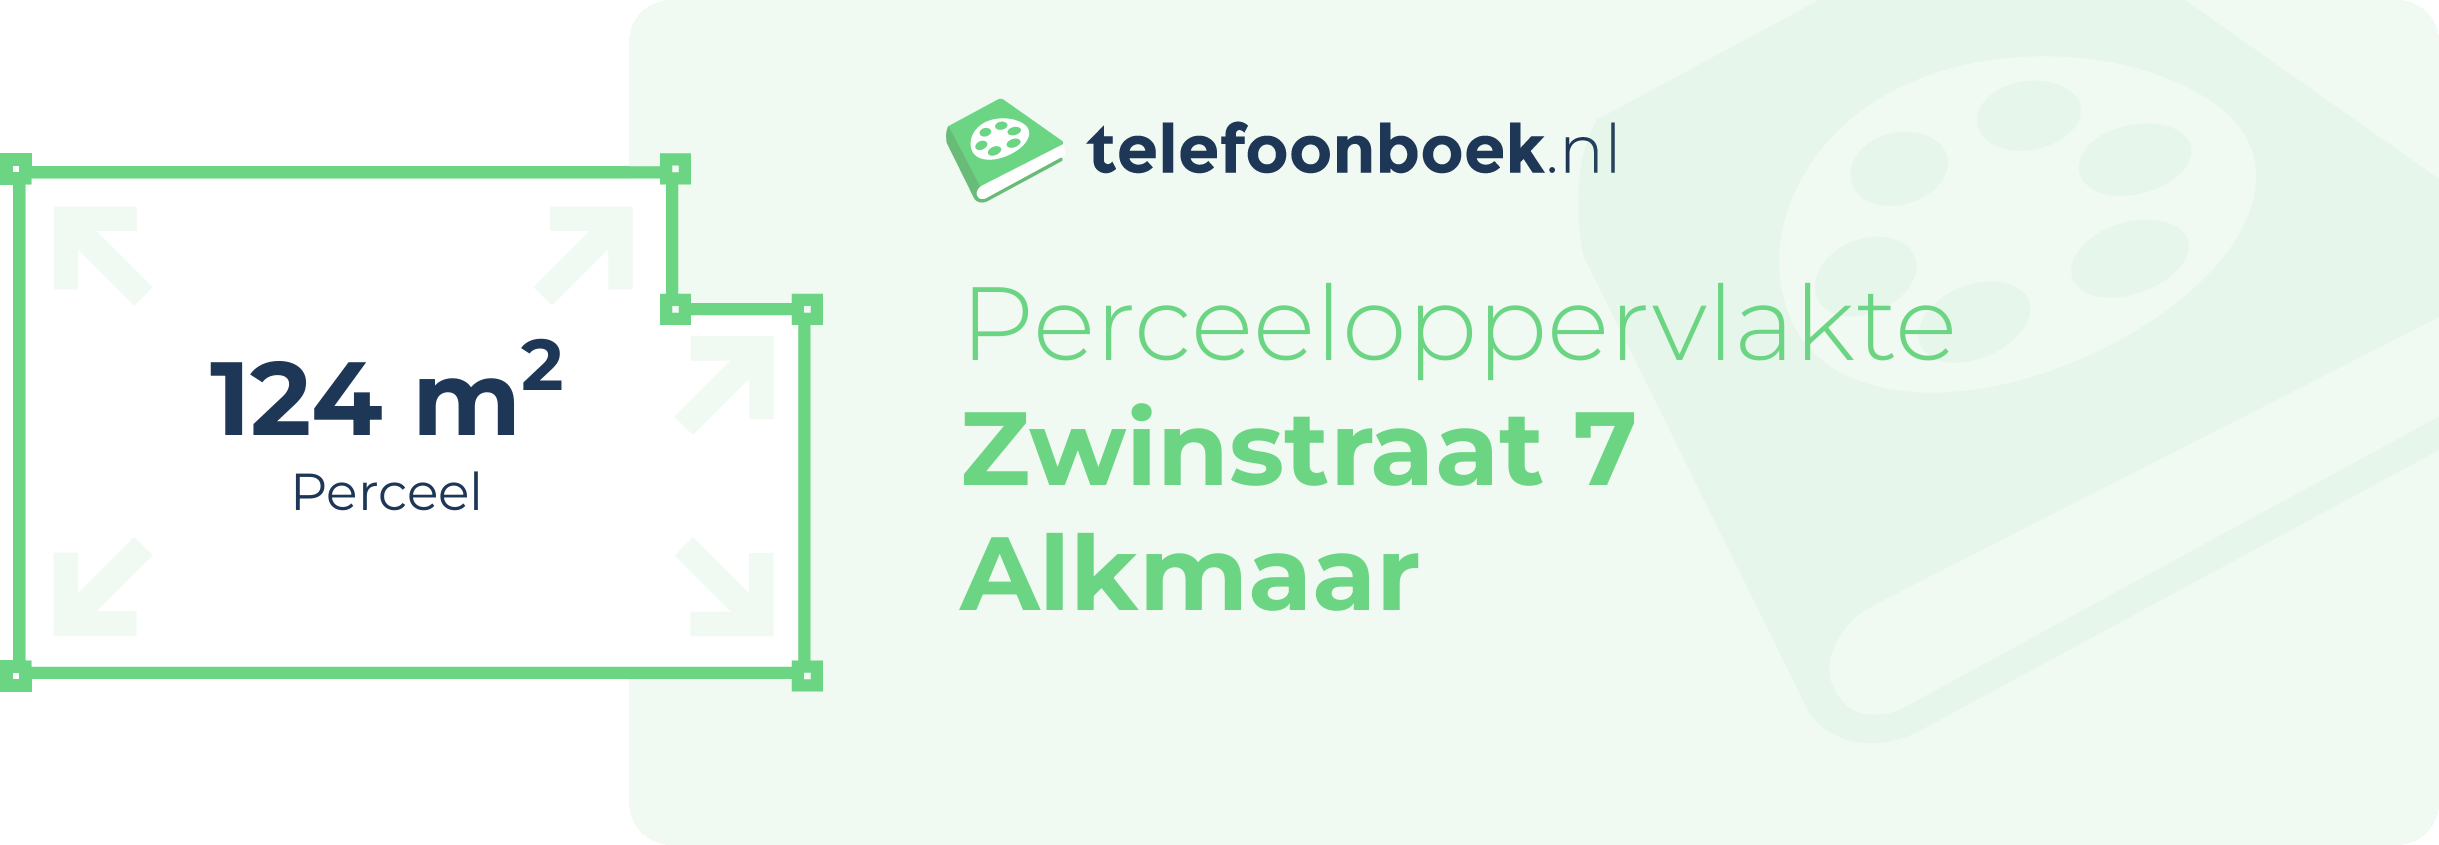 Perceeloppervlakte Zwinstraat 7 Alkmaar